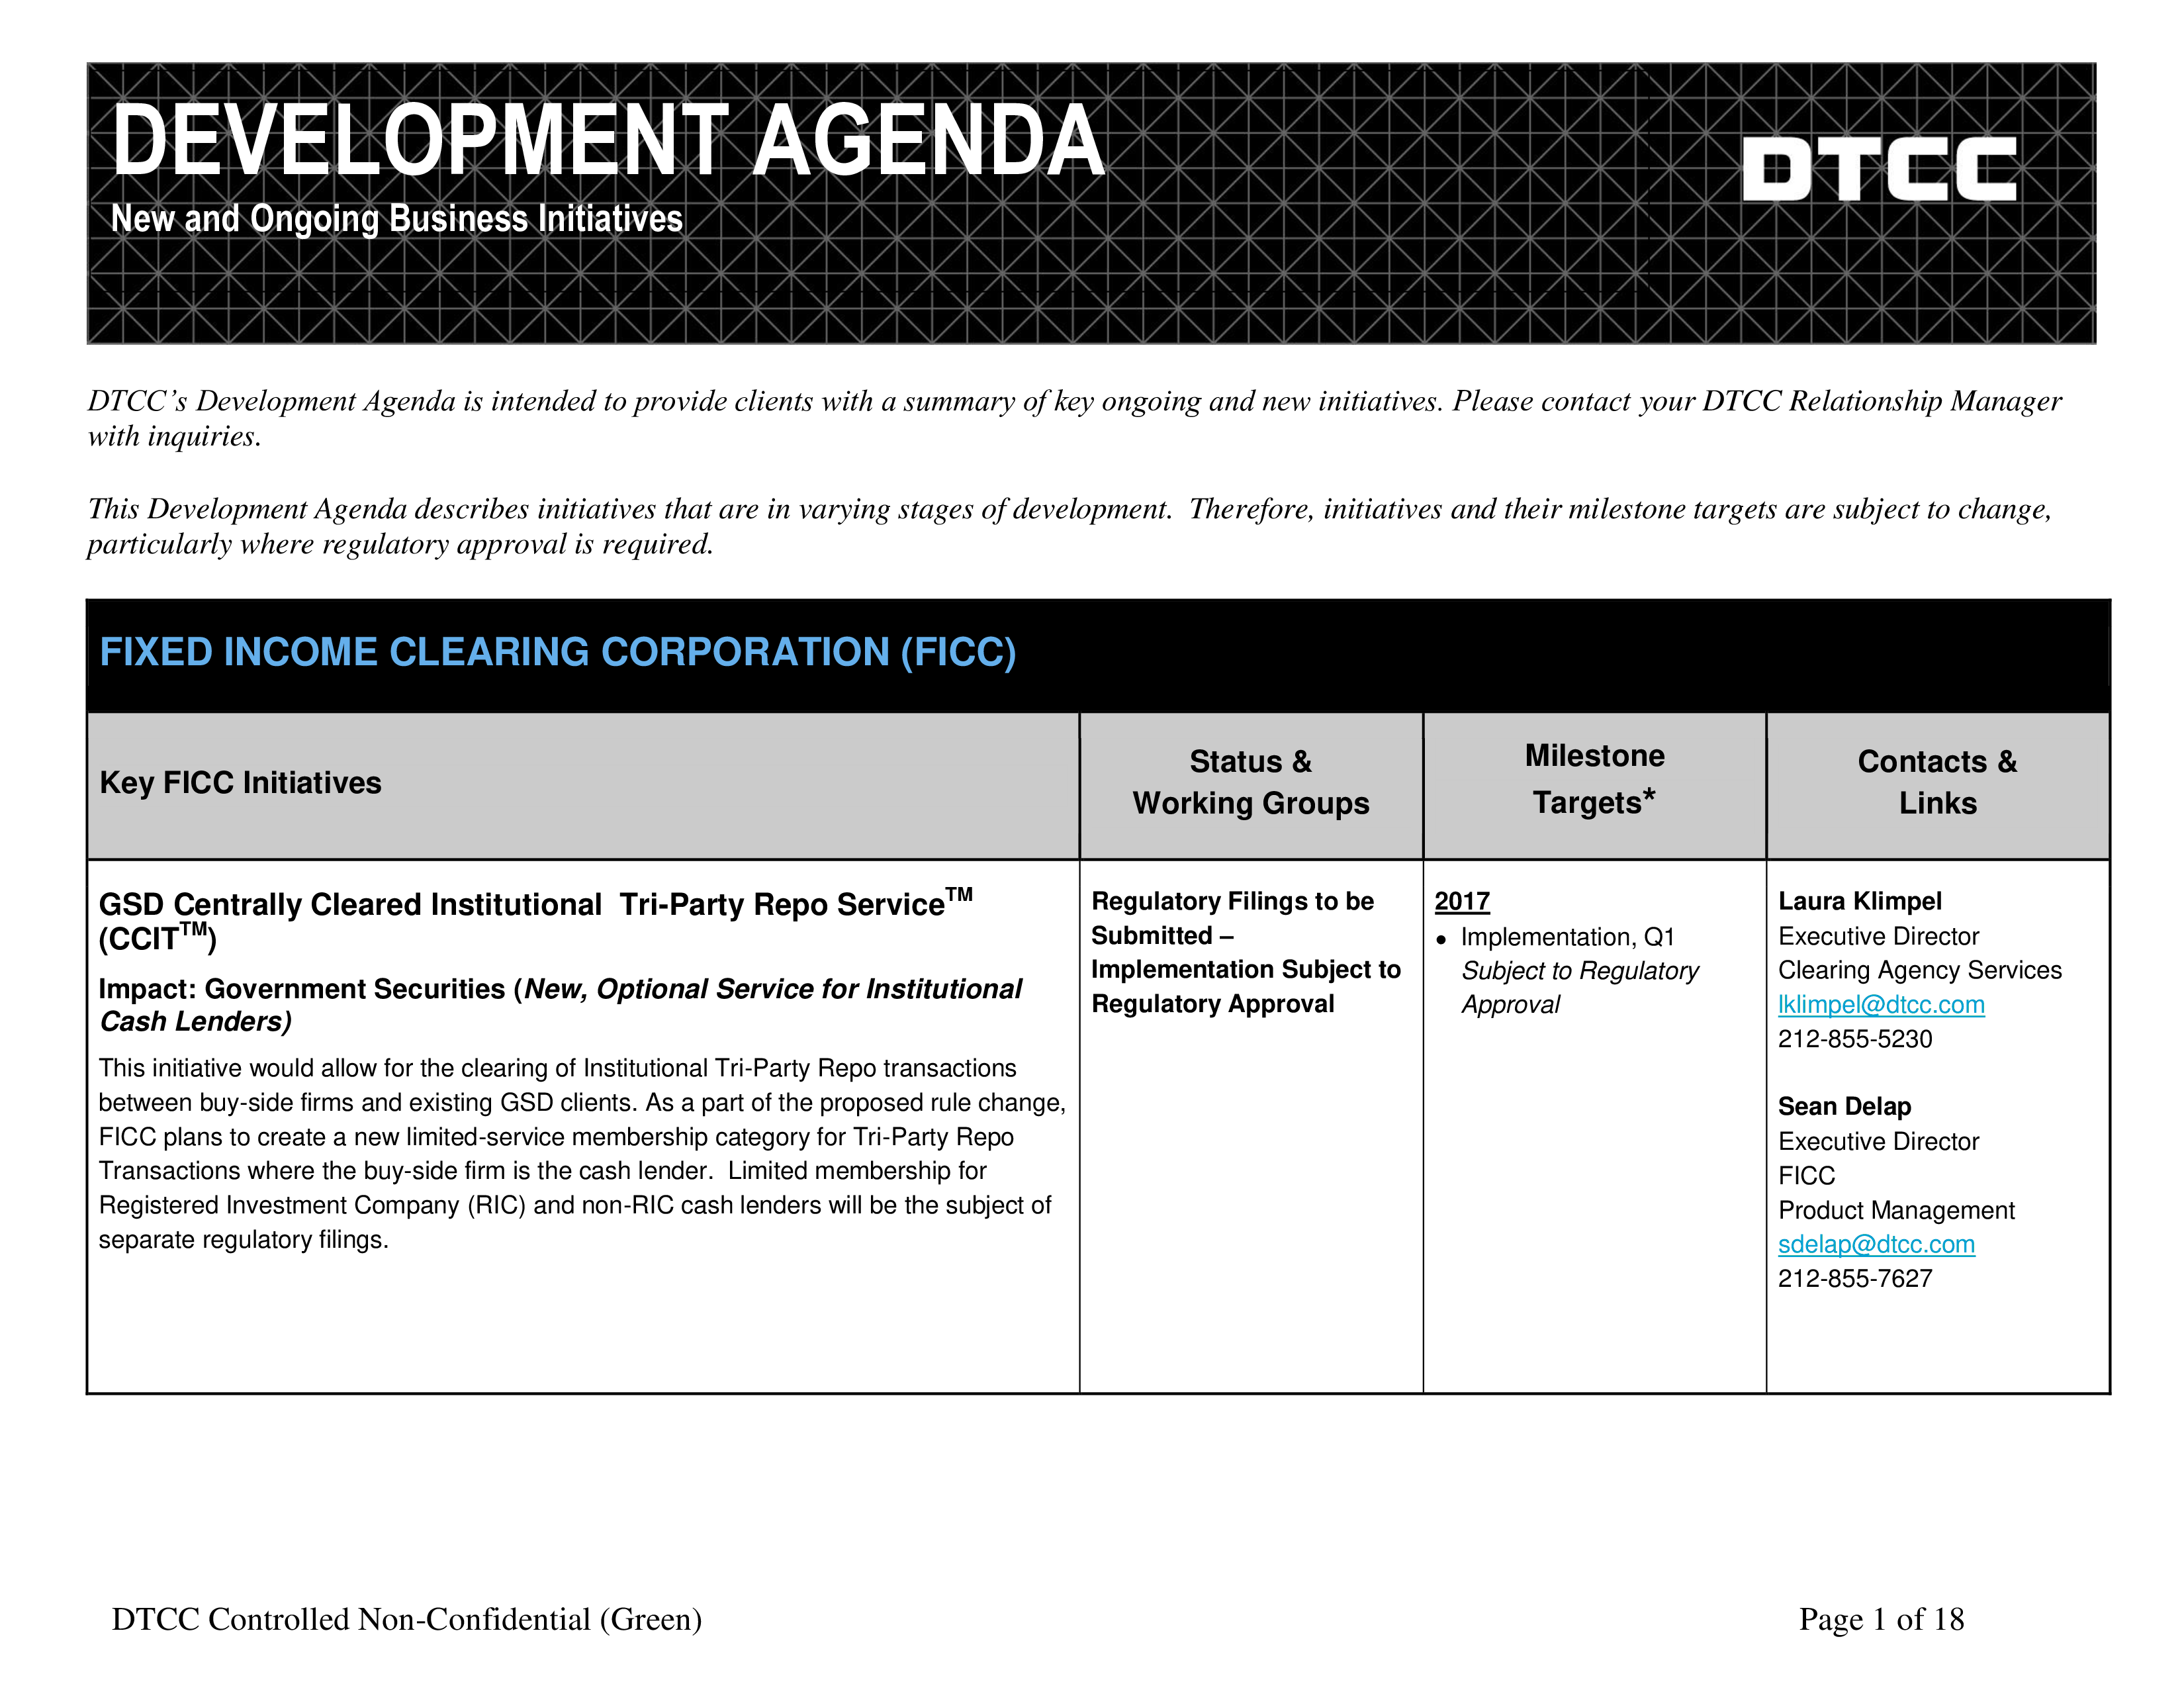 development agenda guide plantilla imagen principal